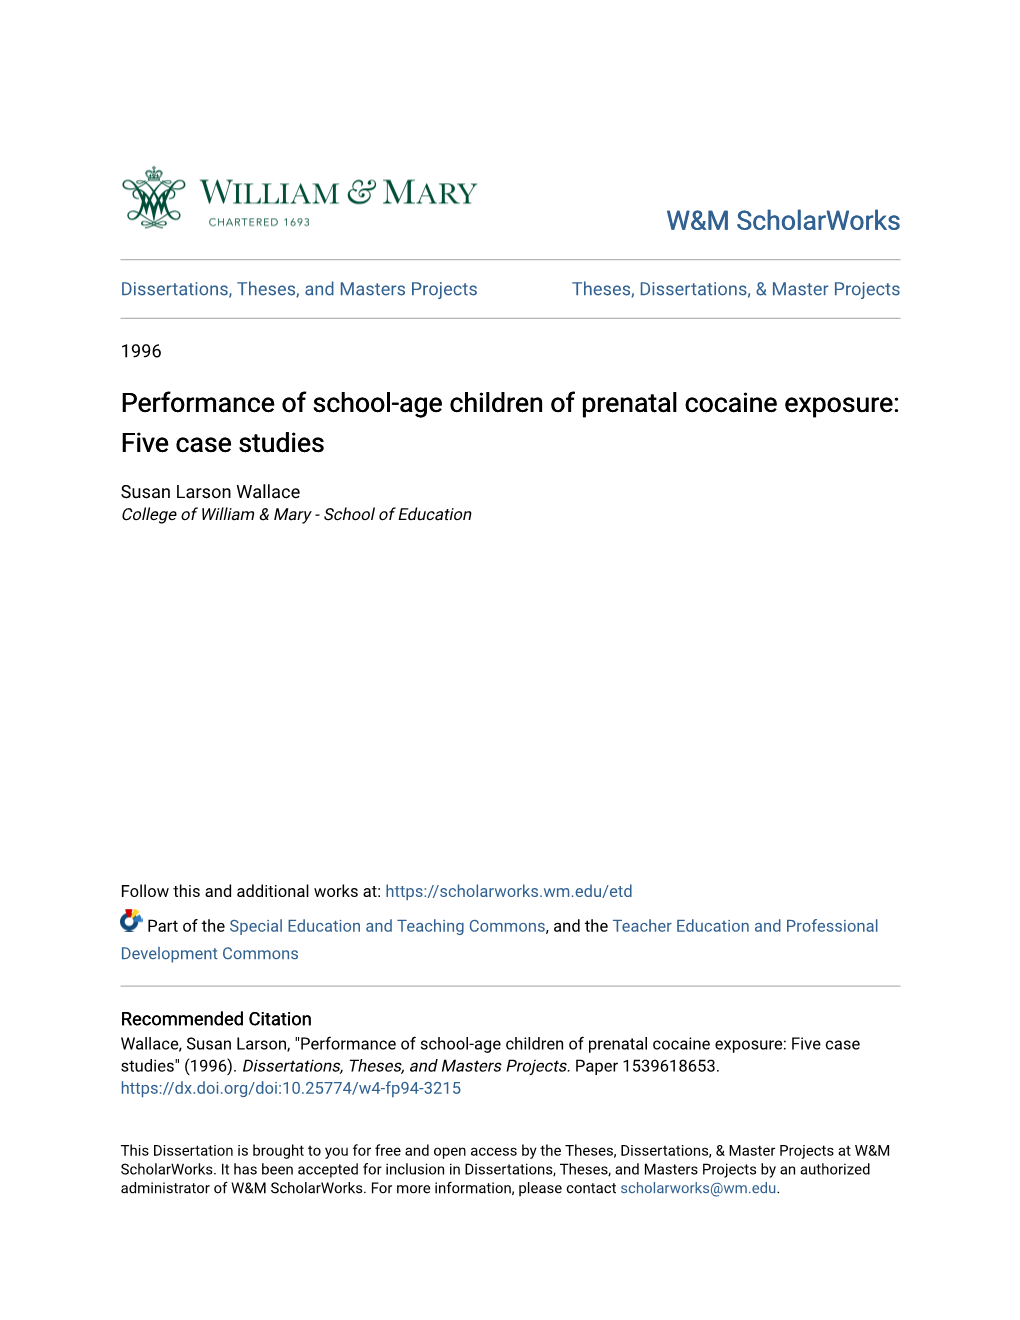 Performance of School-Age Children of Prenatal Cocaine Exposure: Five Case Studies